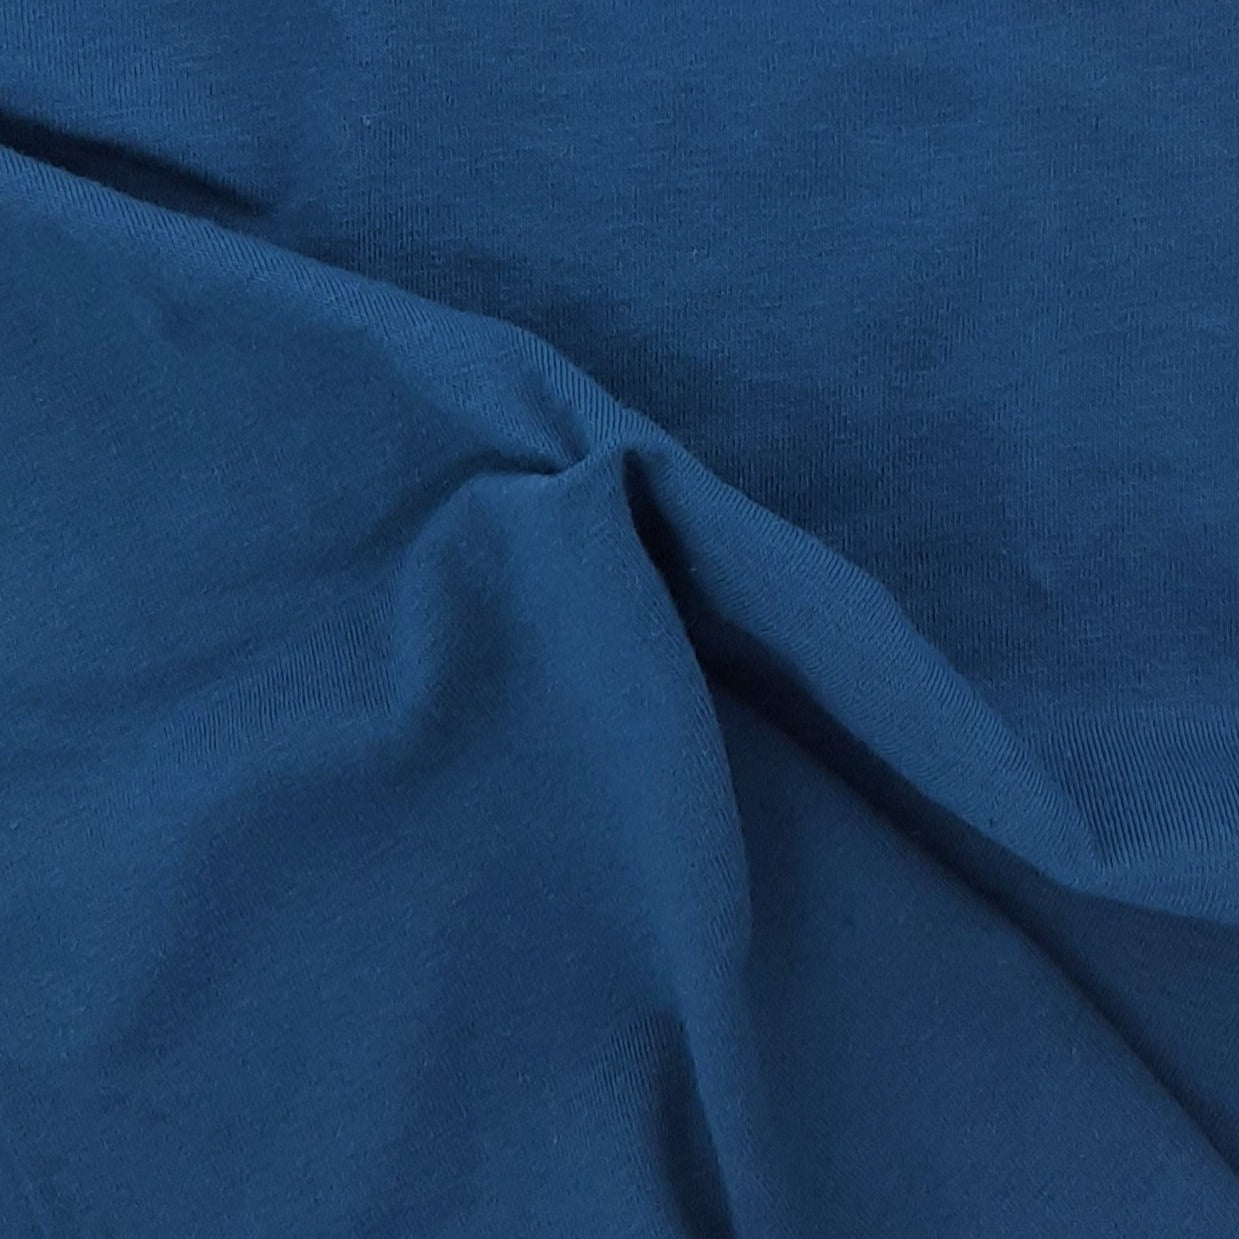 Dark Teal #S Cotton Spandex Jersey 7 Ounce Knit Fabric - SKU 6840B